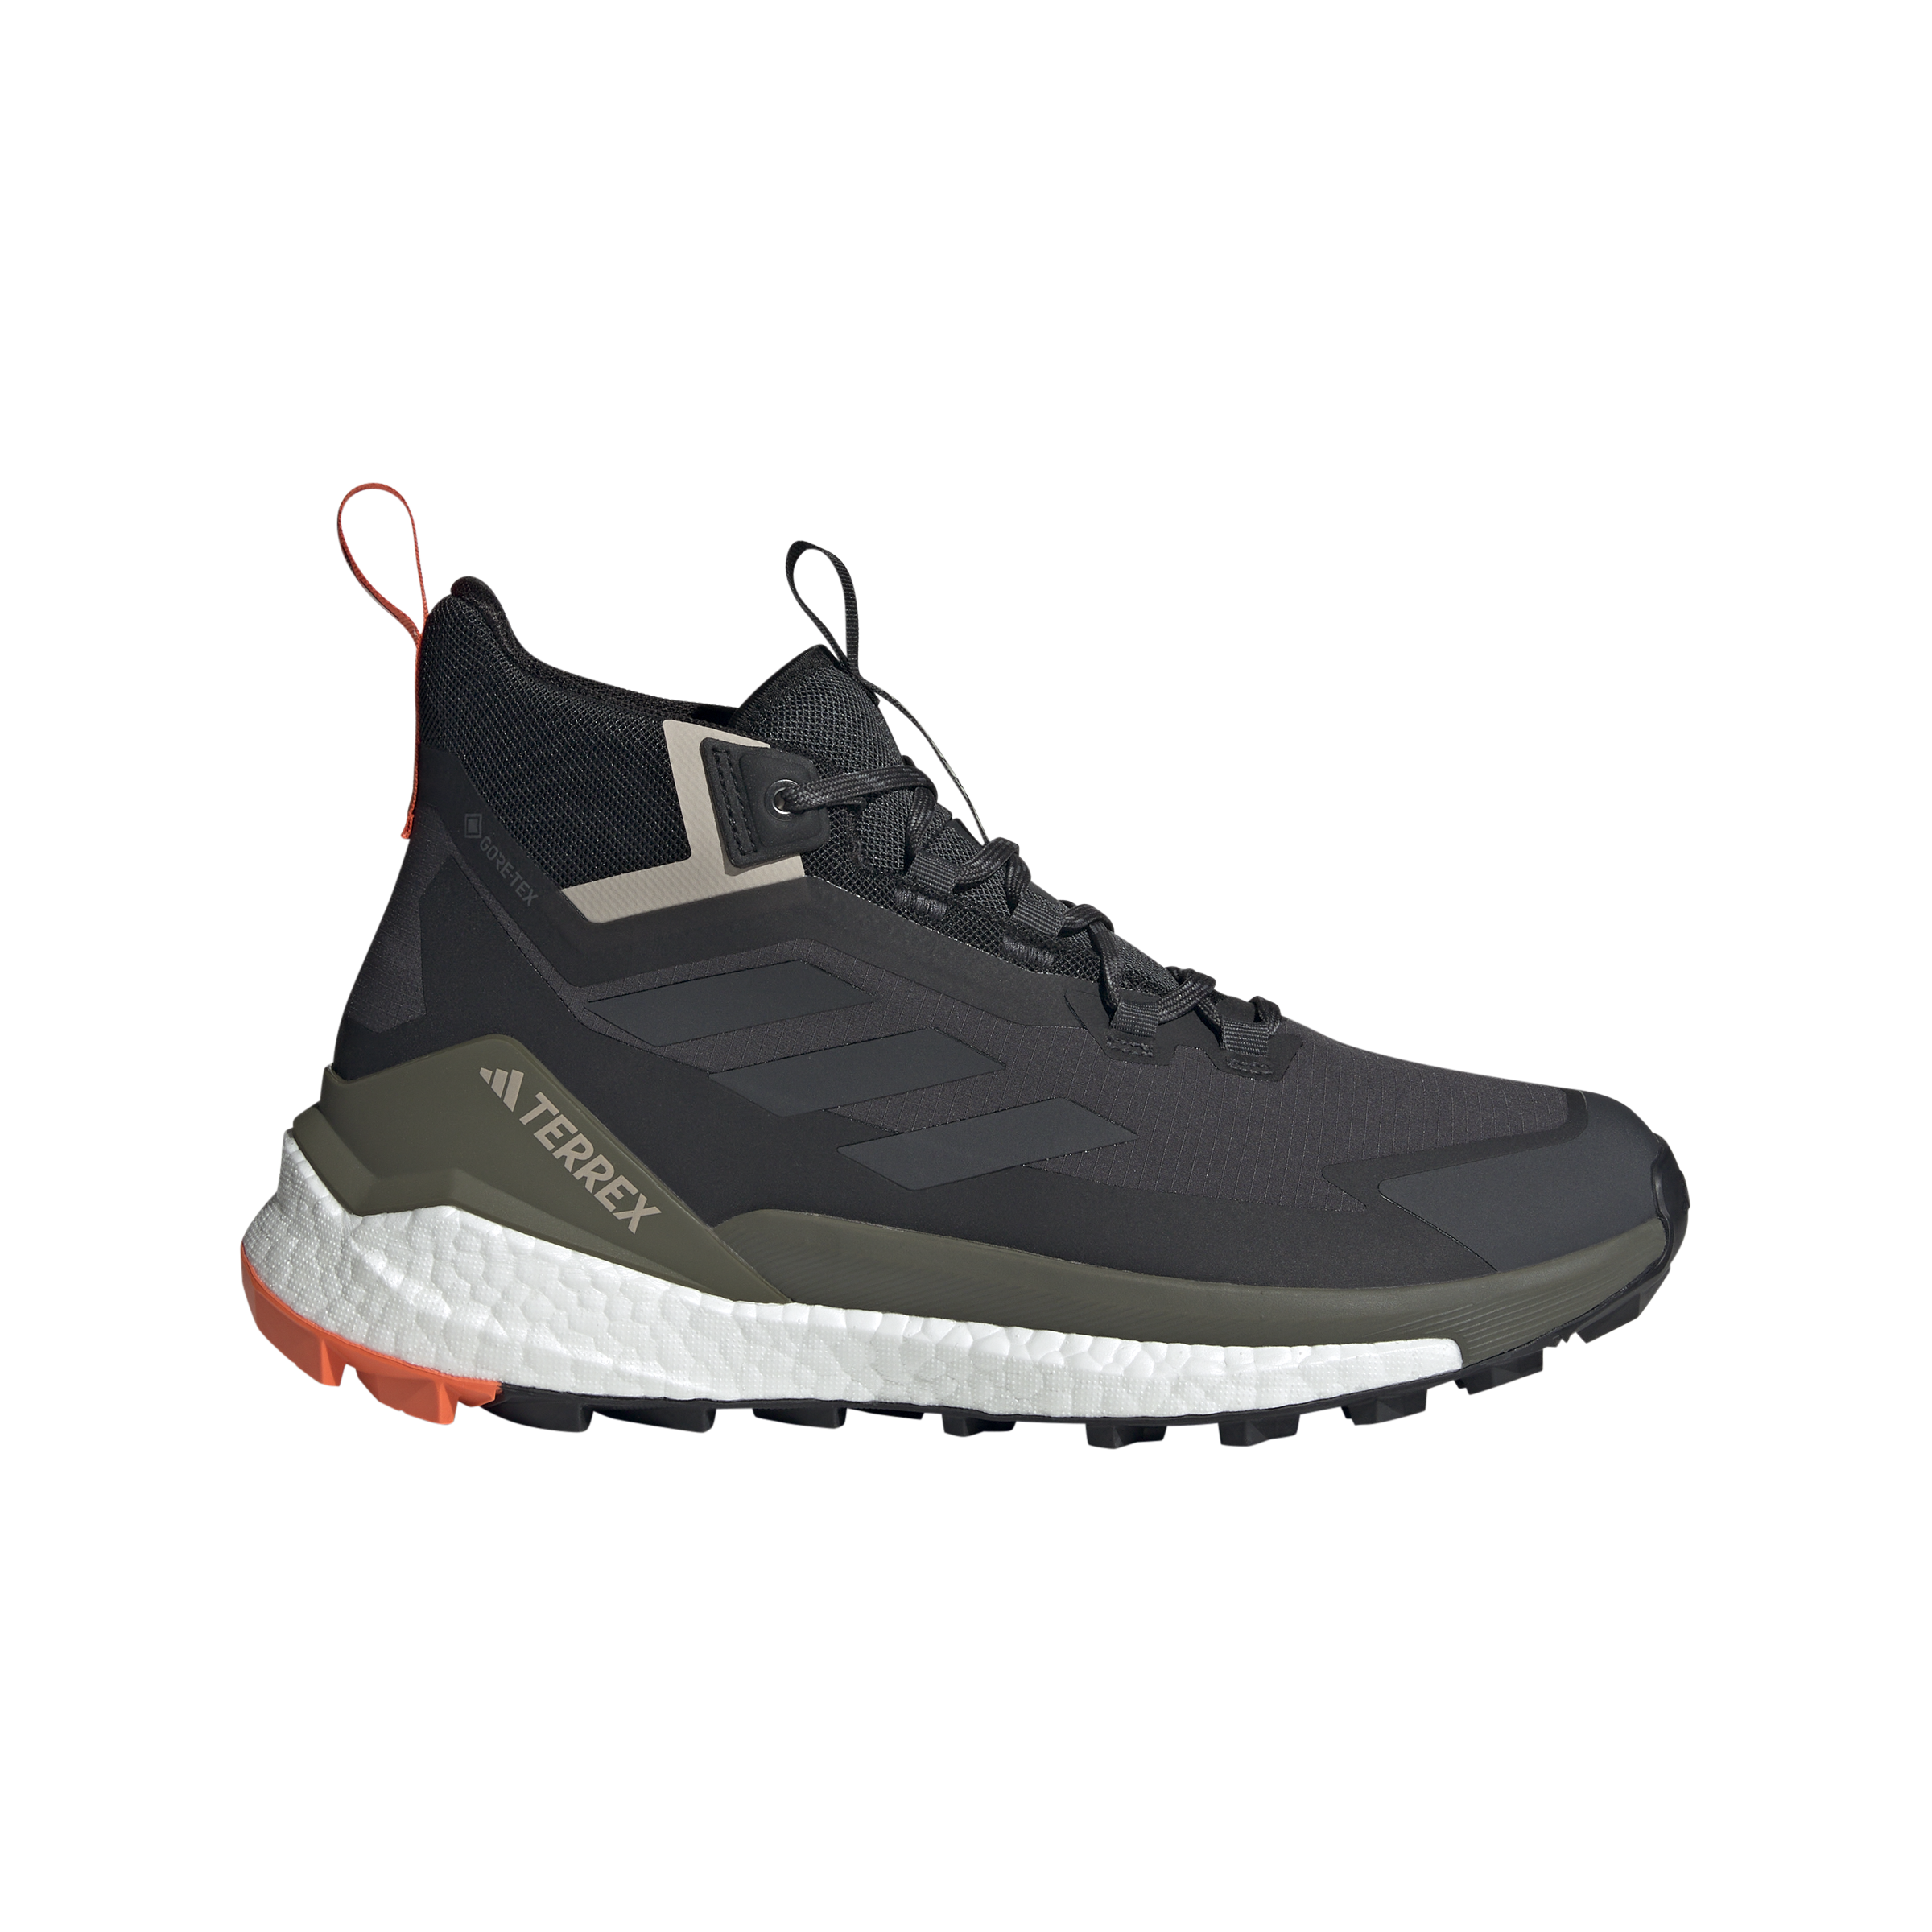 Adidas Men’s Terrex Free Hiker GORE-TEX Hiking Shoes 2.0 Carbon/Gresix/Cblack